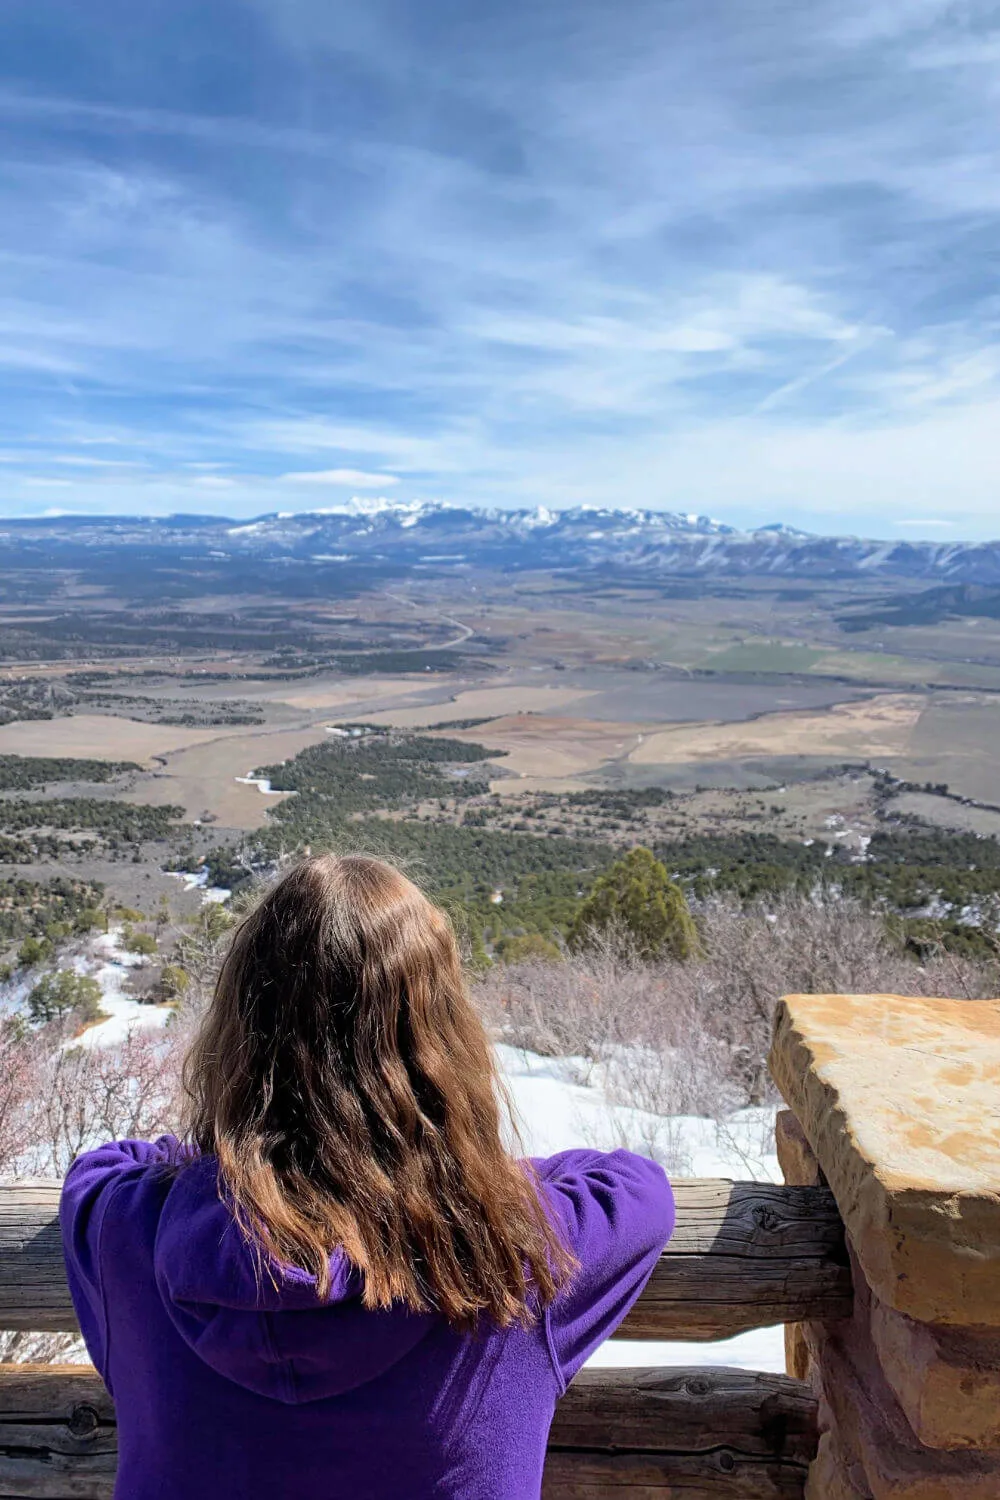 Mancos Valley Overlook, enjoying the view of Mesa Verde National Park #mesaverde #familytravel